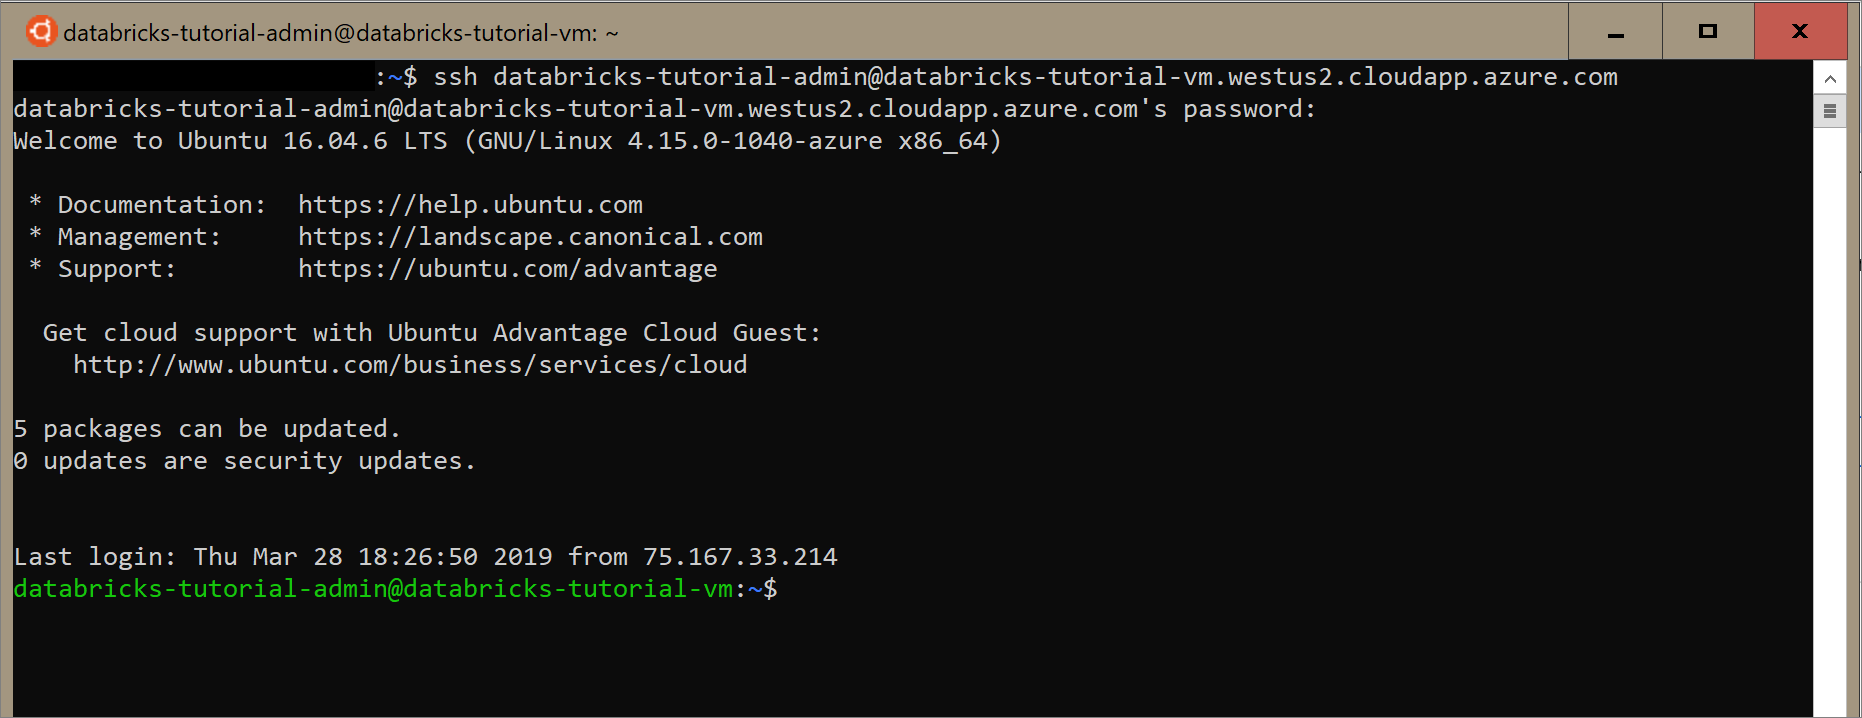 Вход в терминал Ubuntu по протоколу SSH